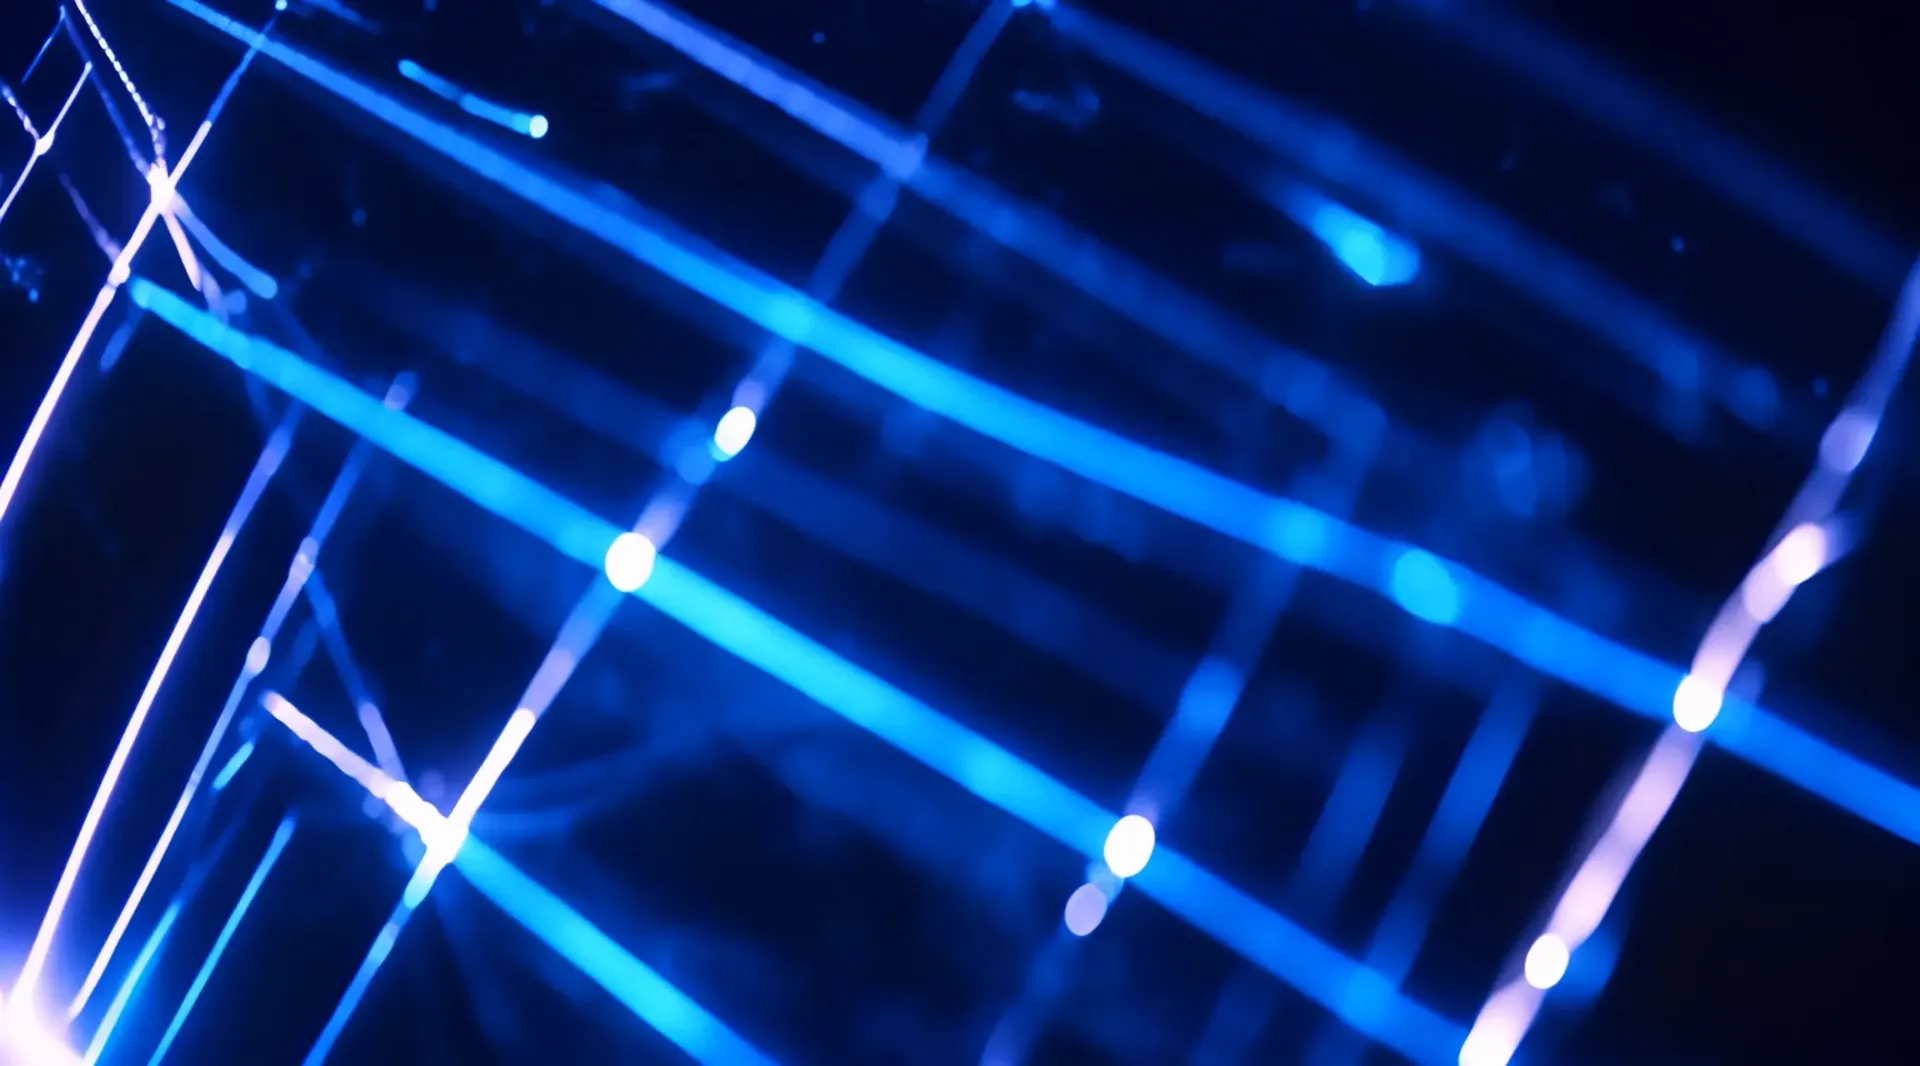 Futuristic Blue Light Grid Cinematic Stock Video